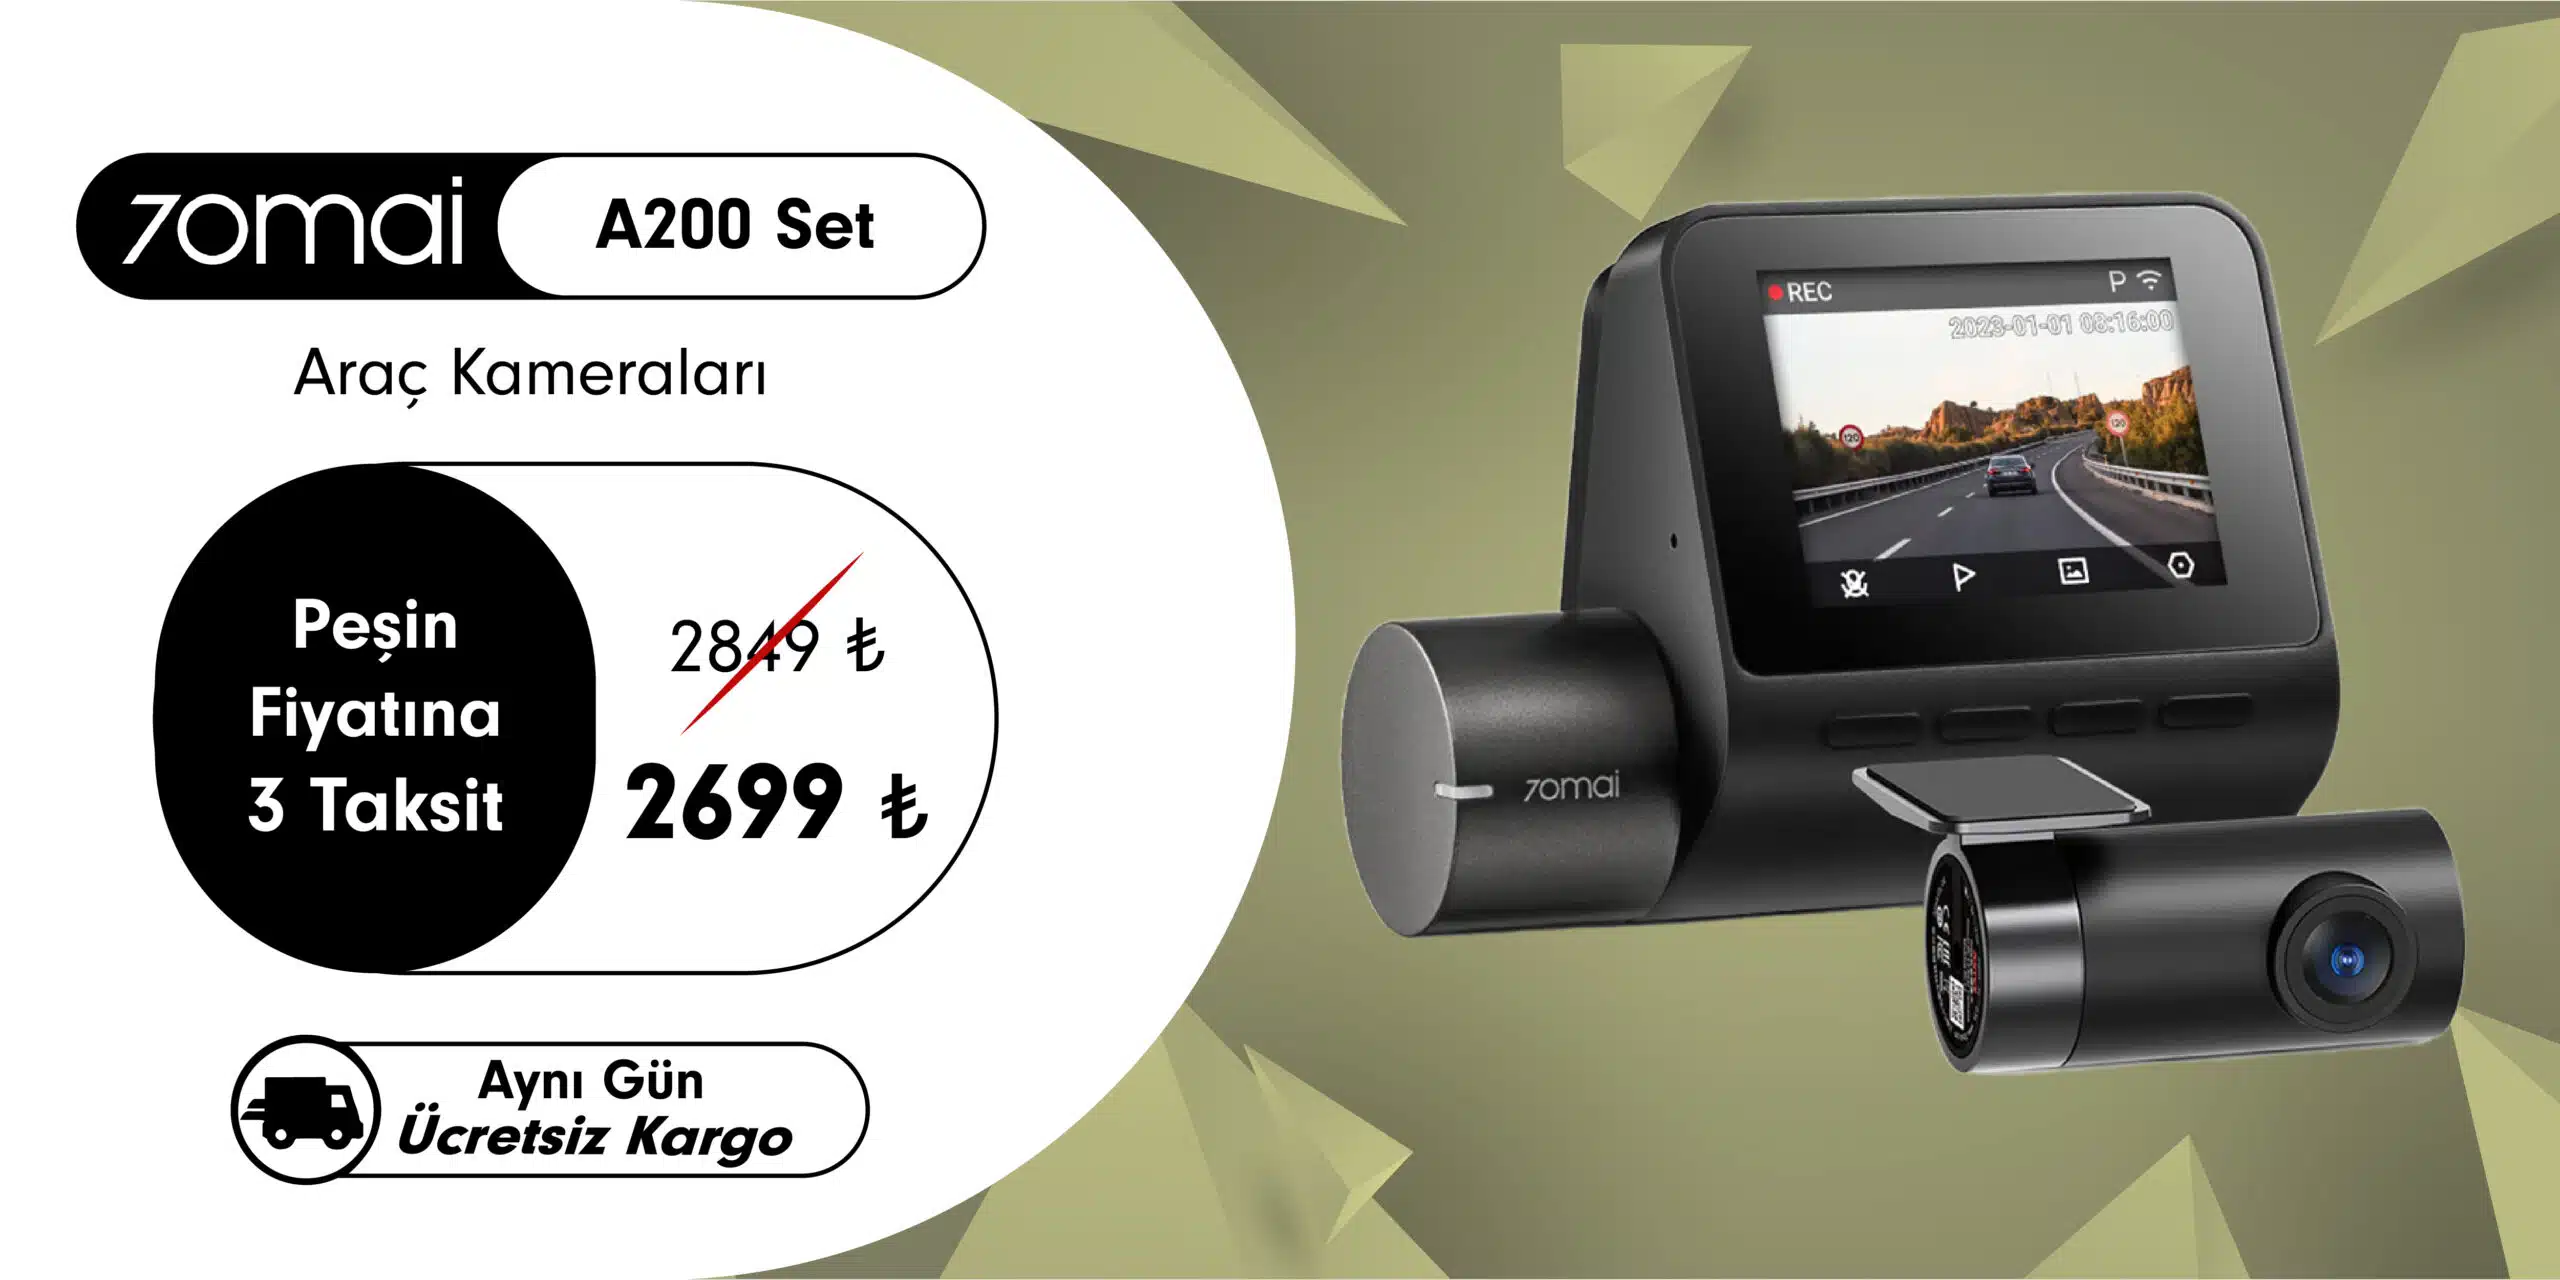 70mai A200 araç kamerası en ucuz